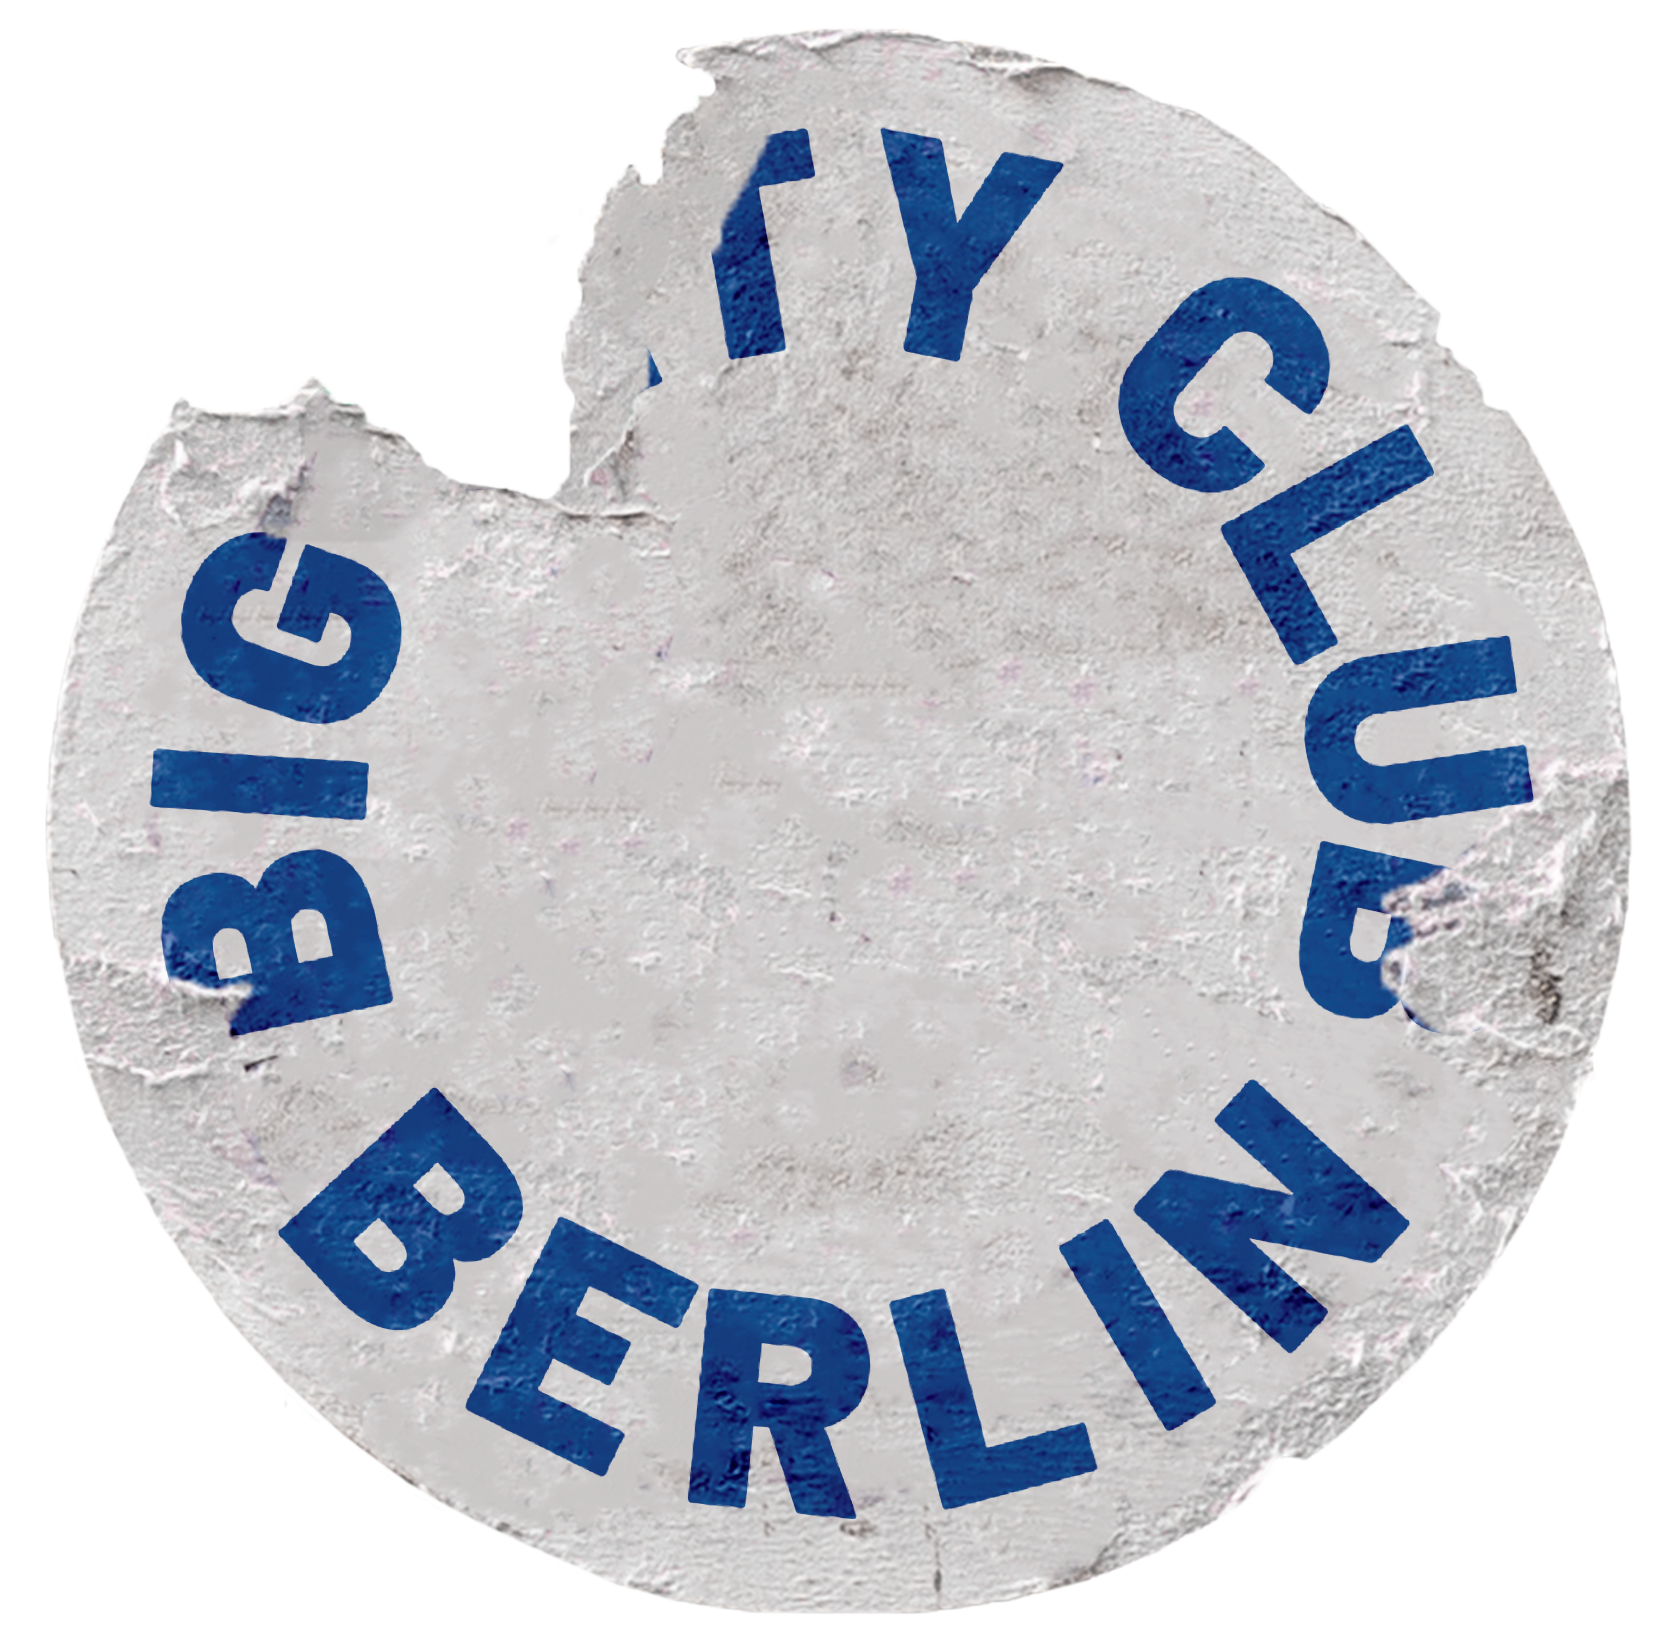 Big City Club